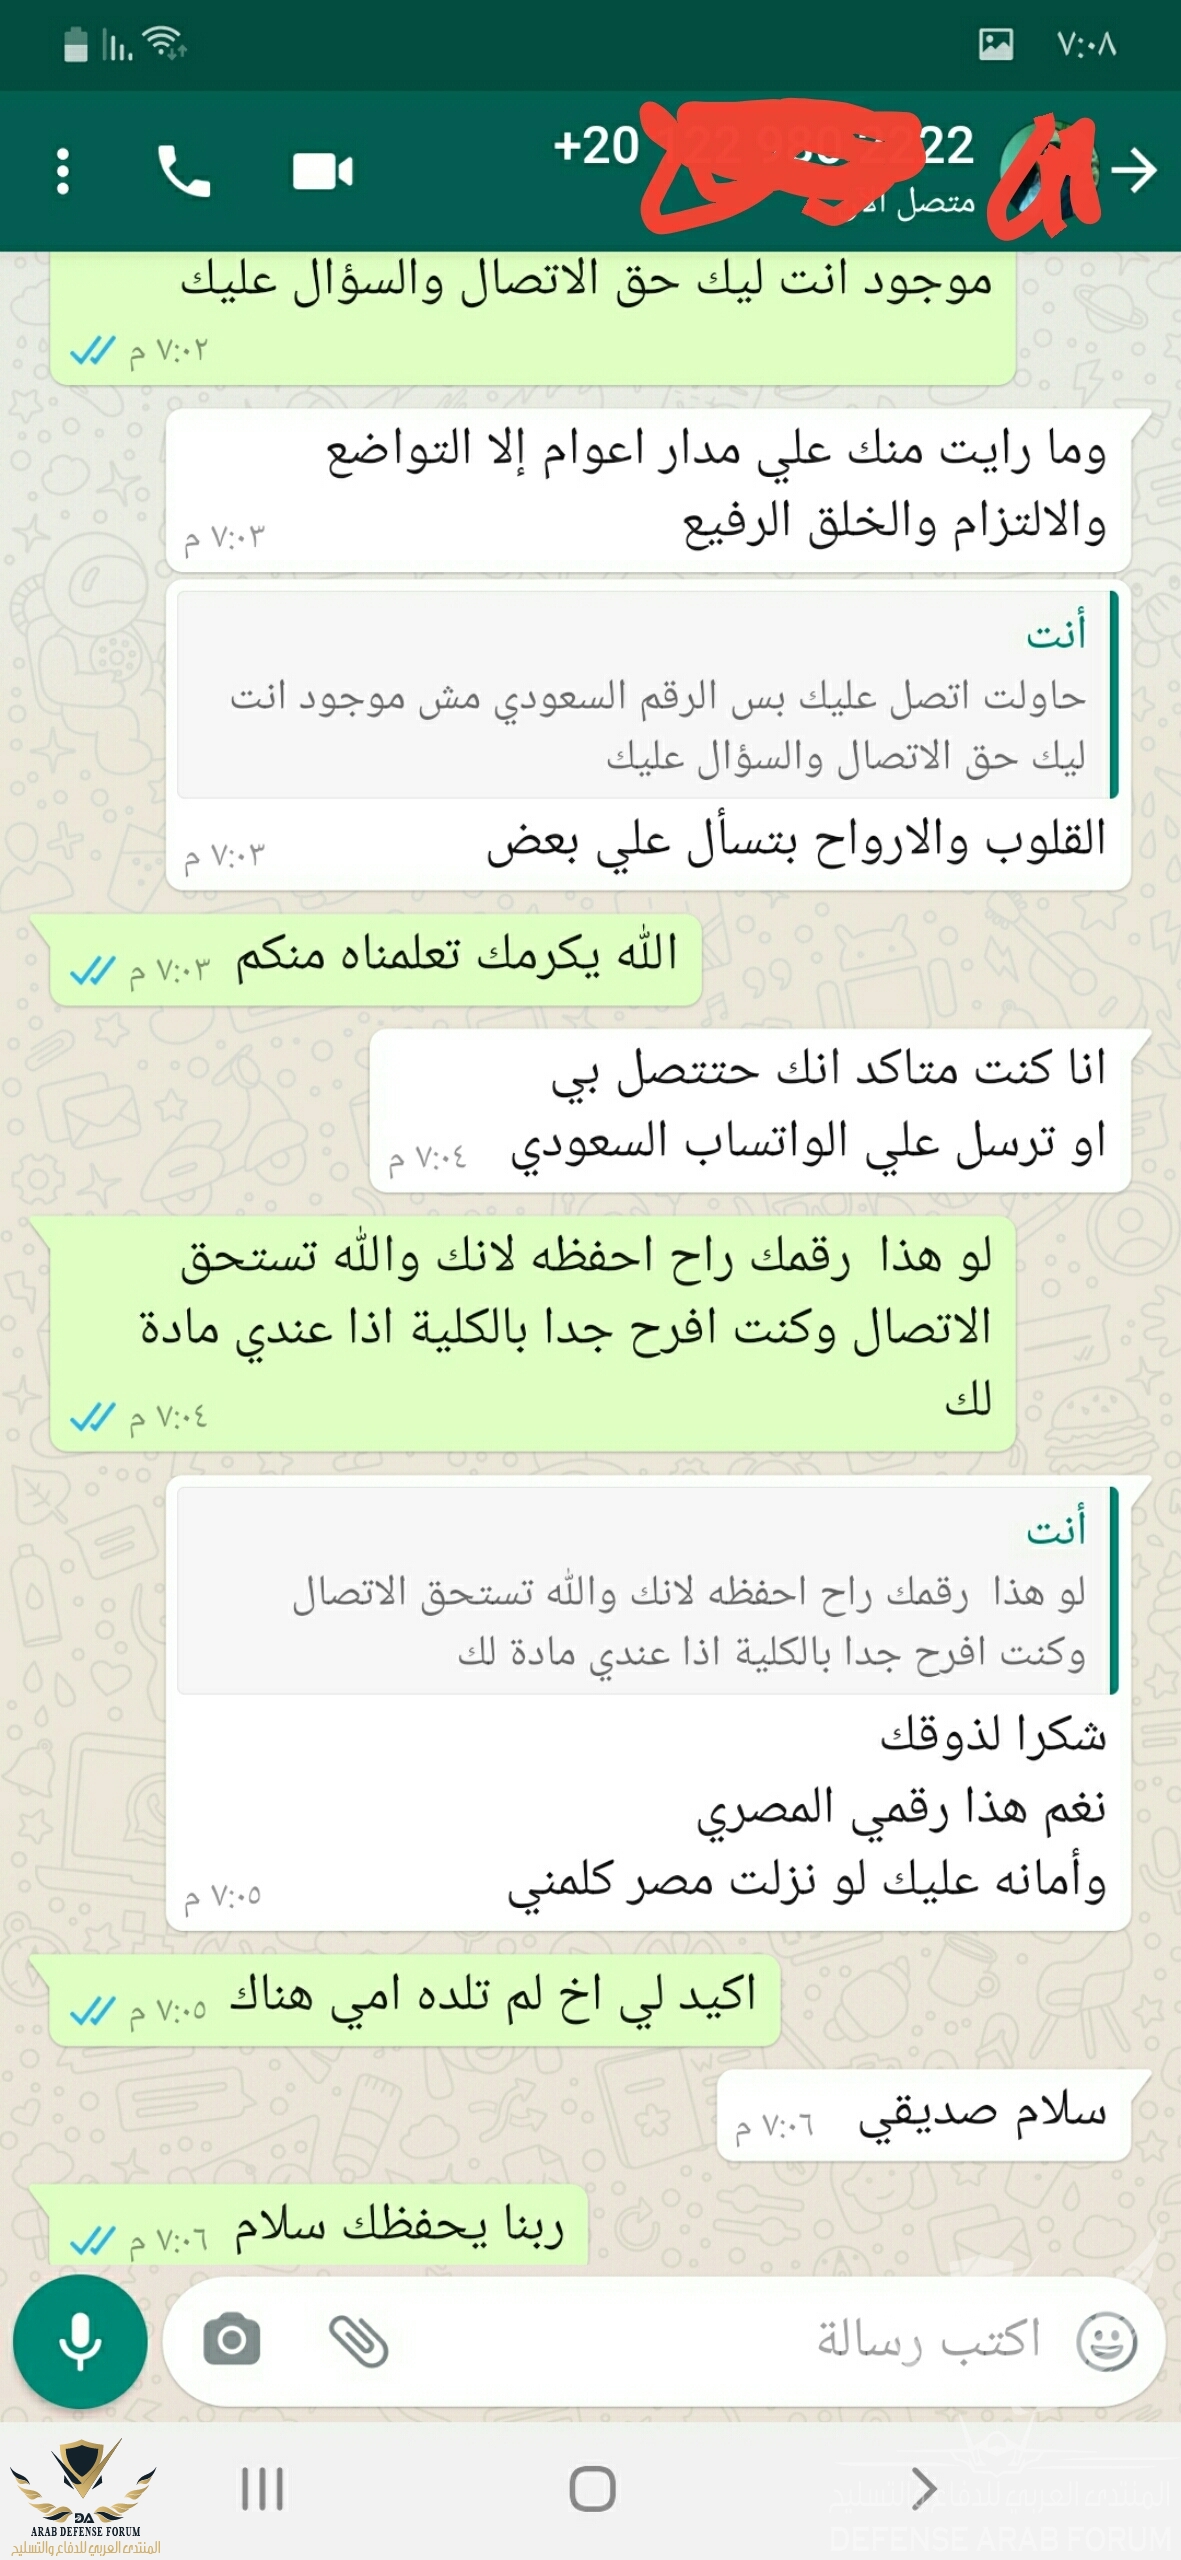 Screenshot_٢٠٢٠٠٣٢٤-١٩٠٨٥١_WhatsApp-1-1.jpg